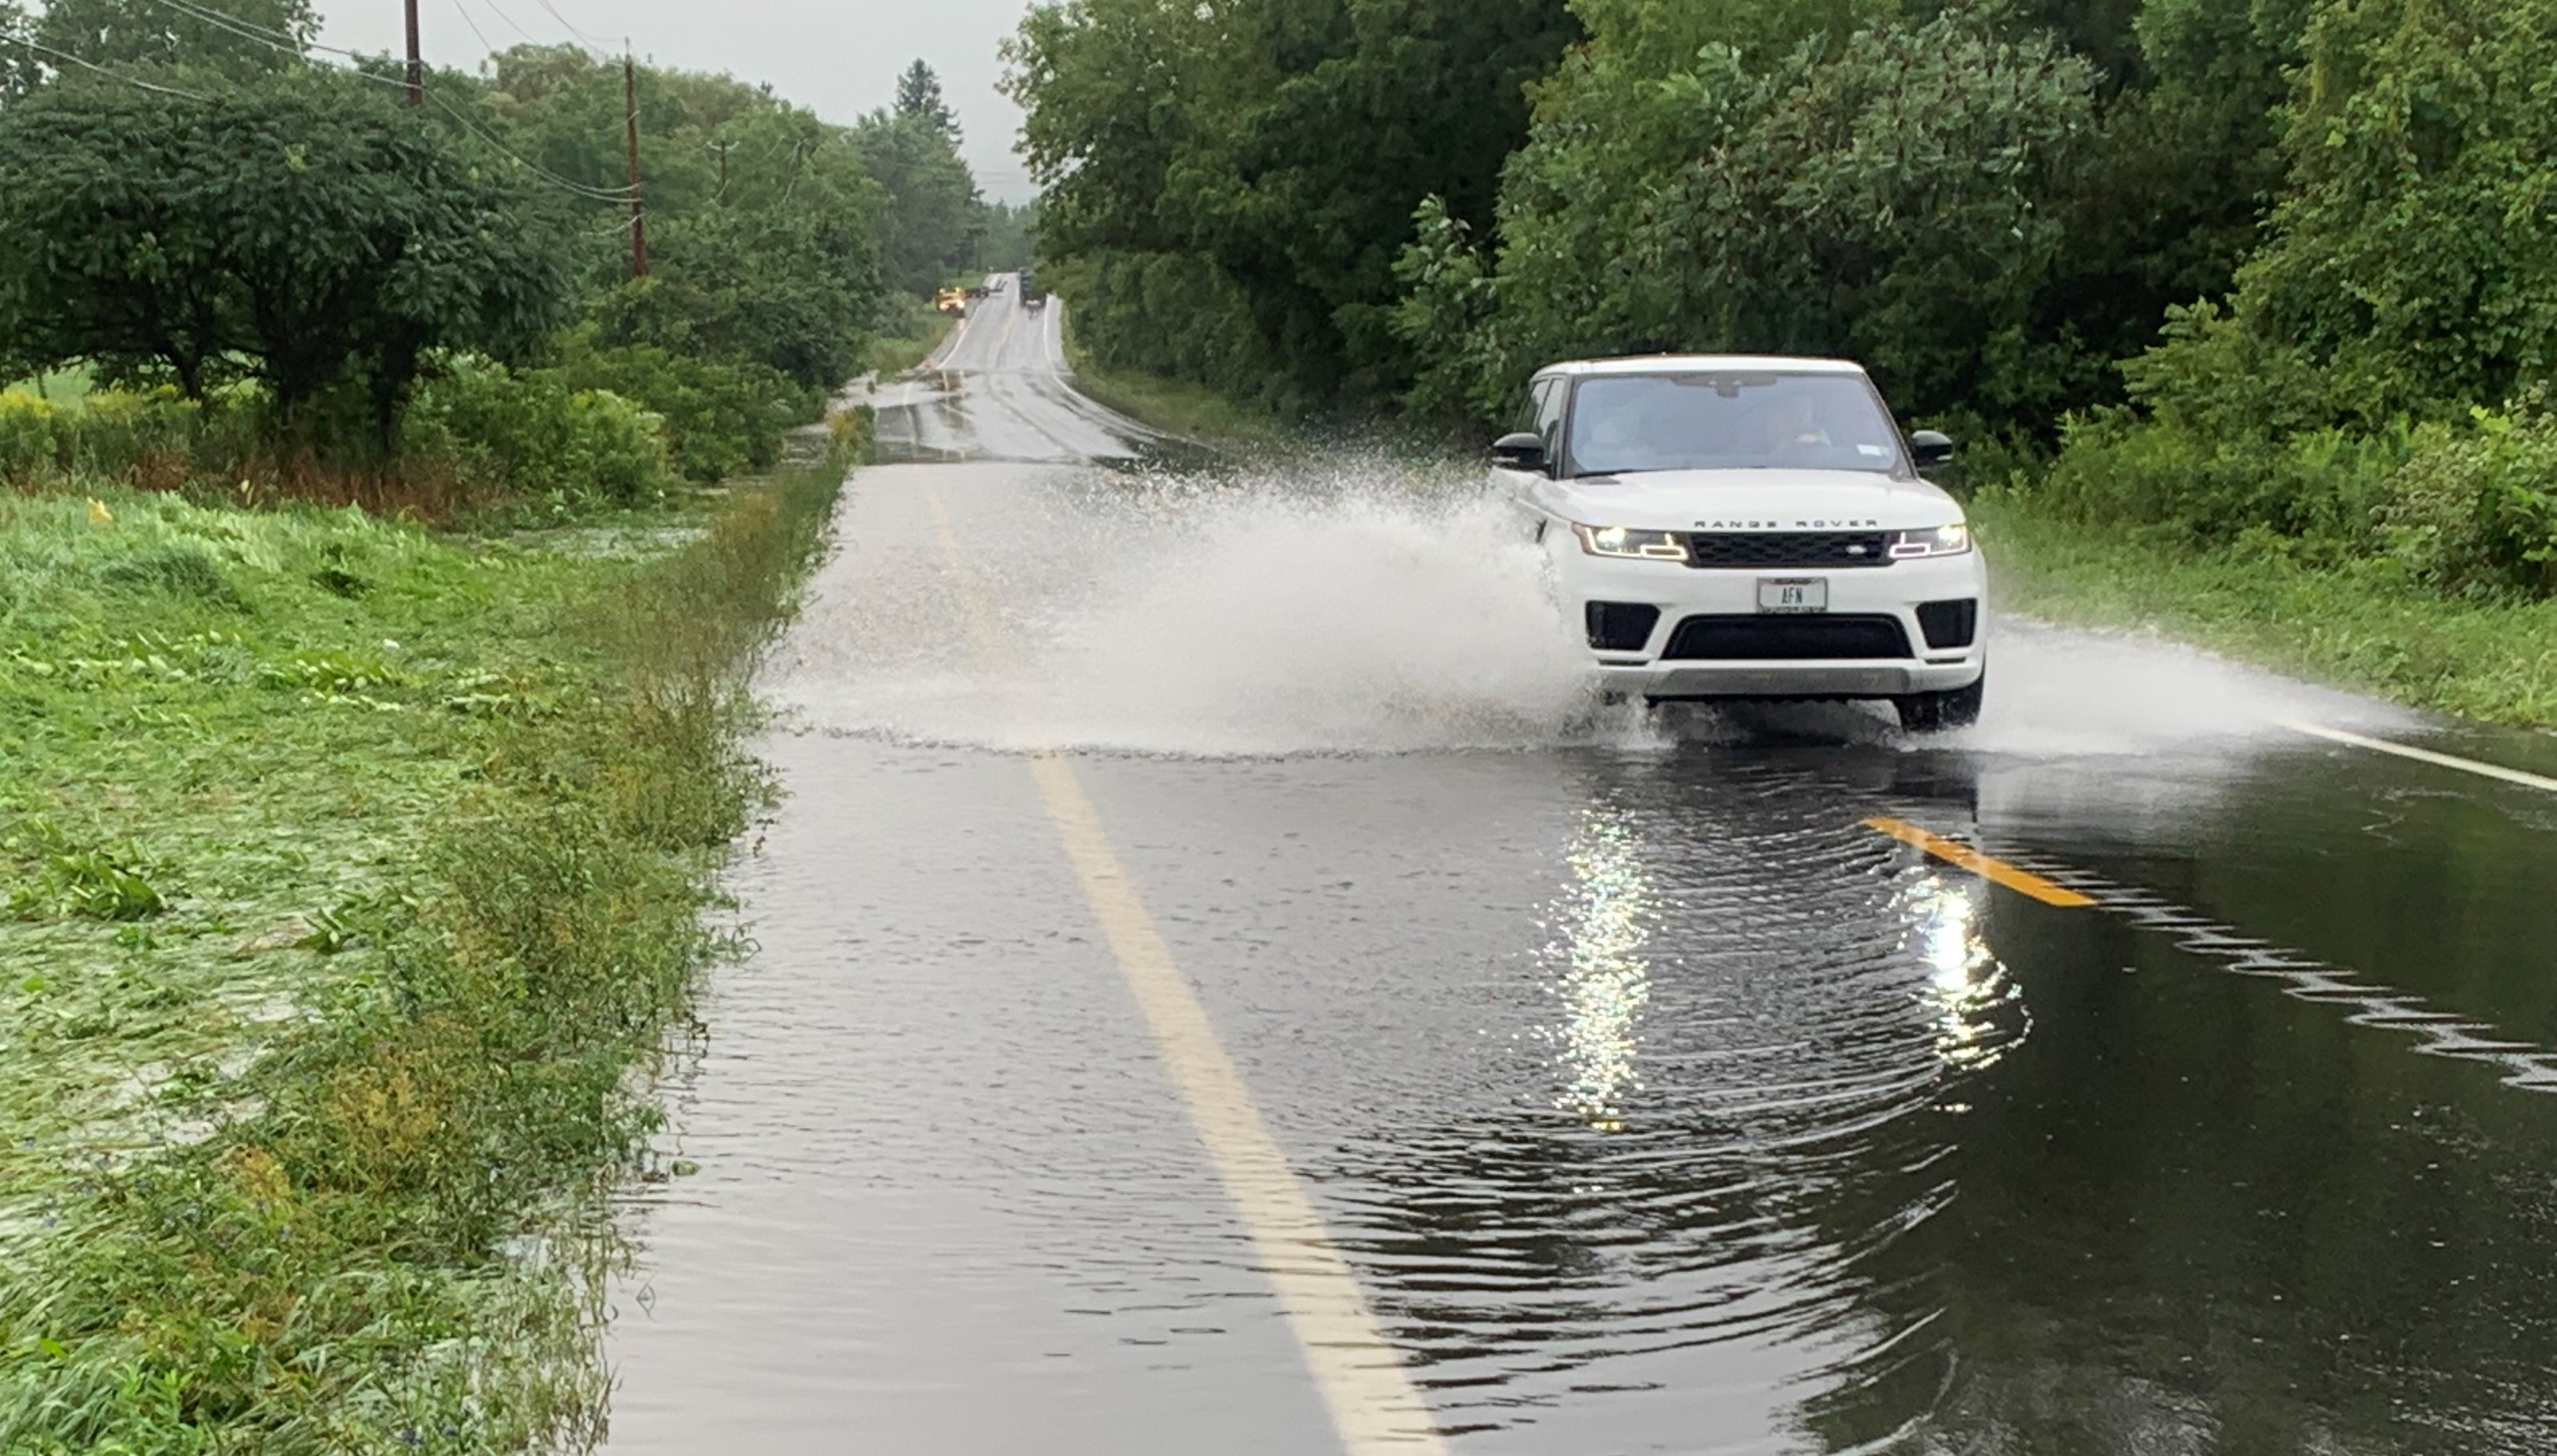 Vehicles splash through standing water along Route 321 in Skaneateles Thursday, Aug. 19, 2021.